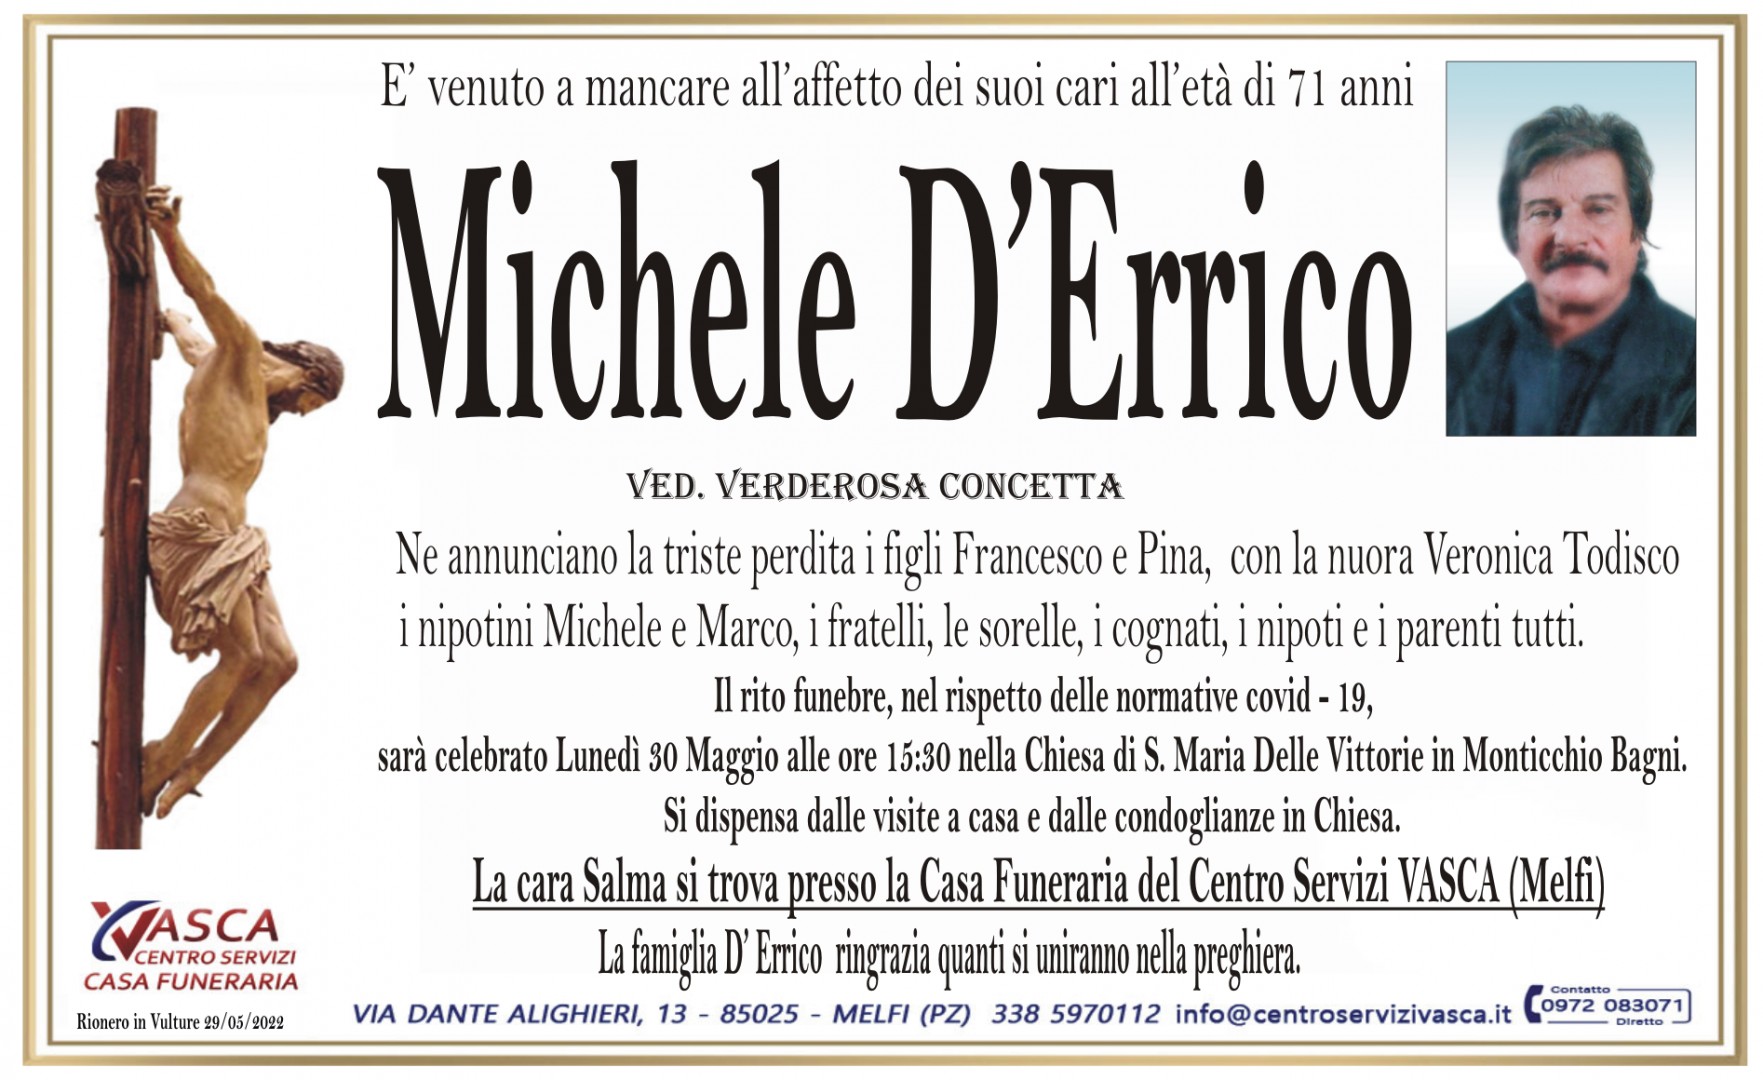 Michele D'errico